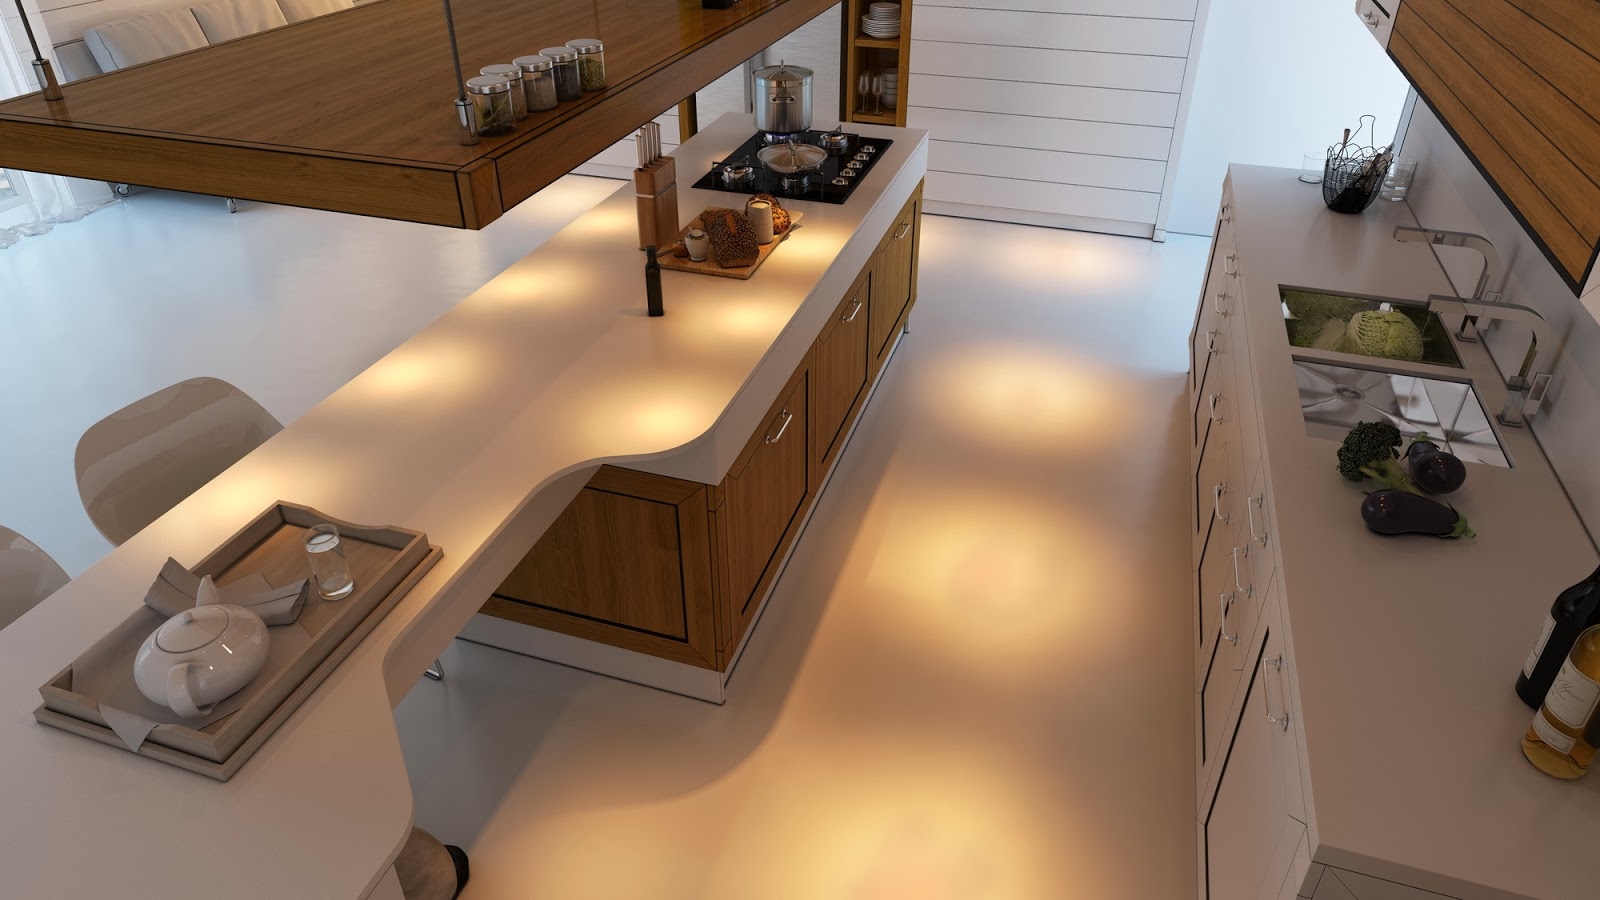 Minimalist kitchen design ideas